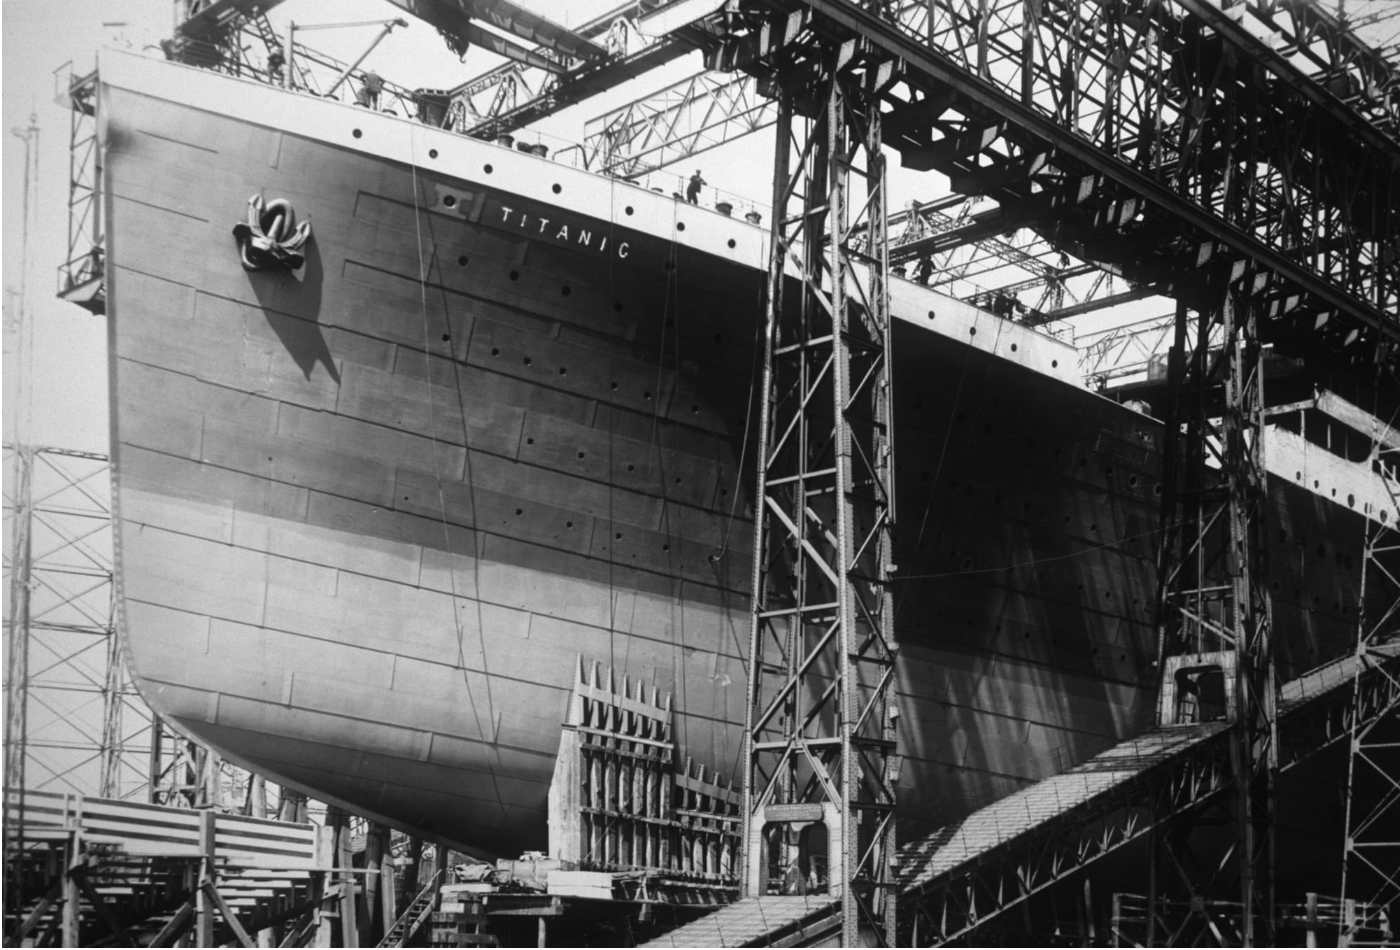 Titanic history photo